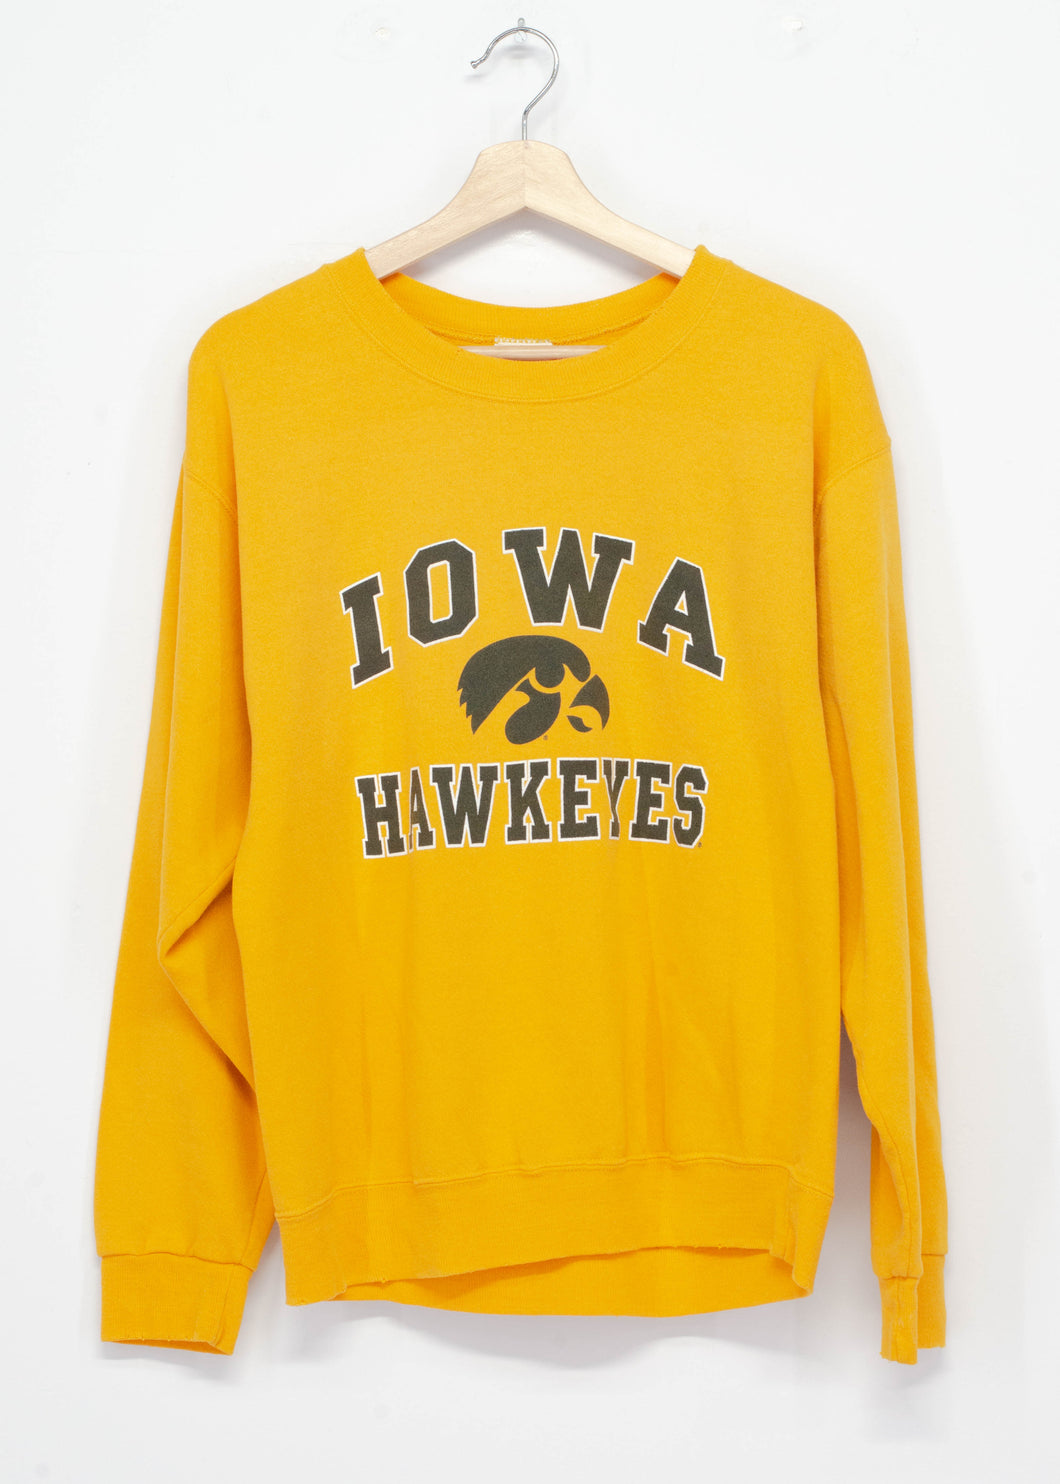 Iowa Hawkeyes Sweatshirt - S/M